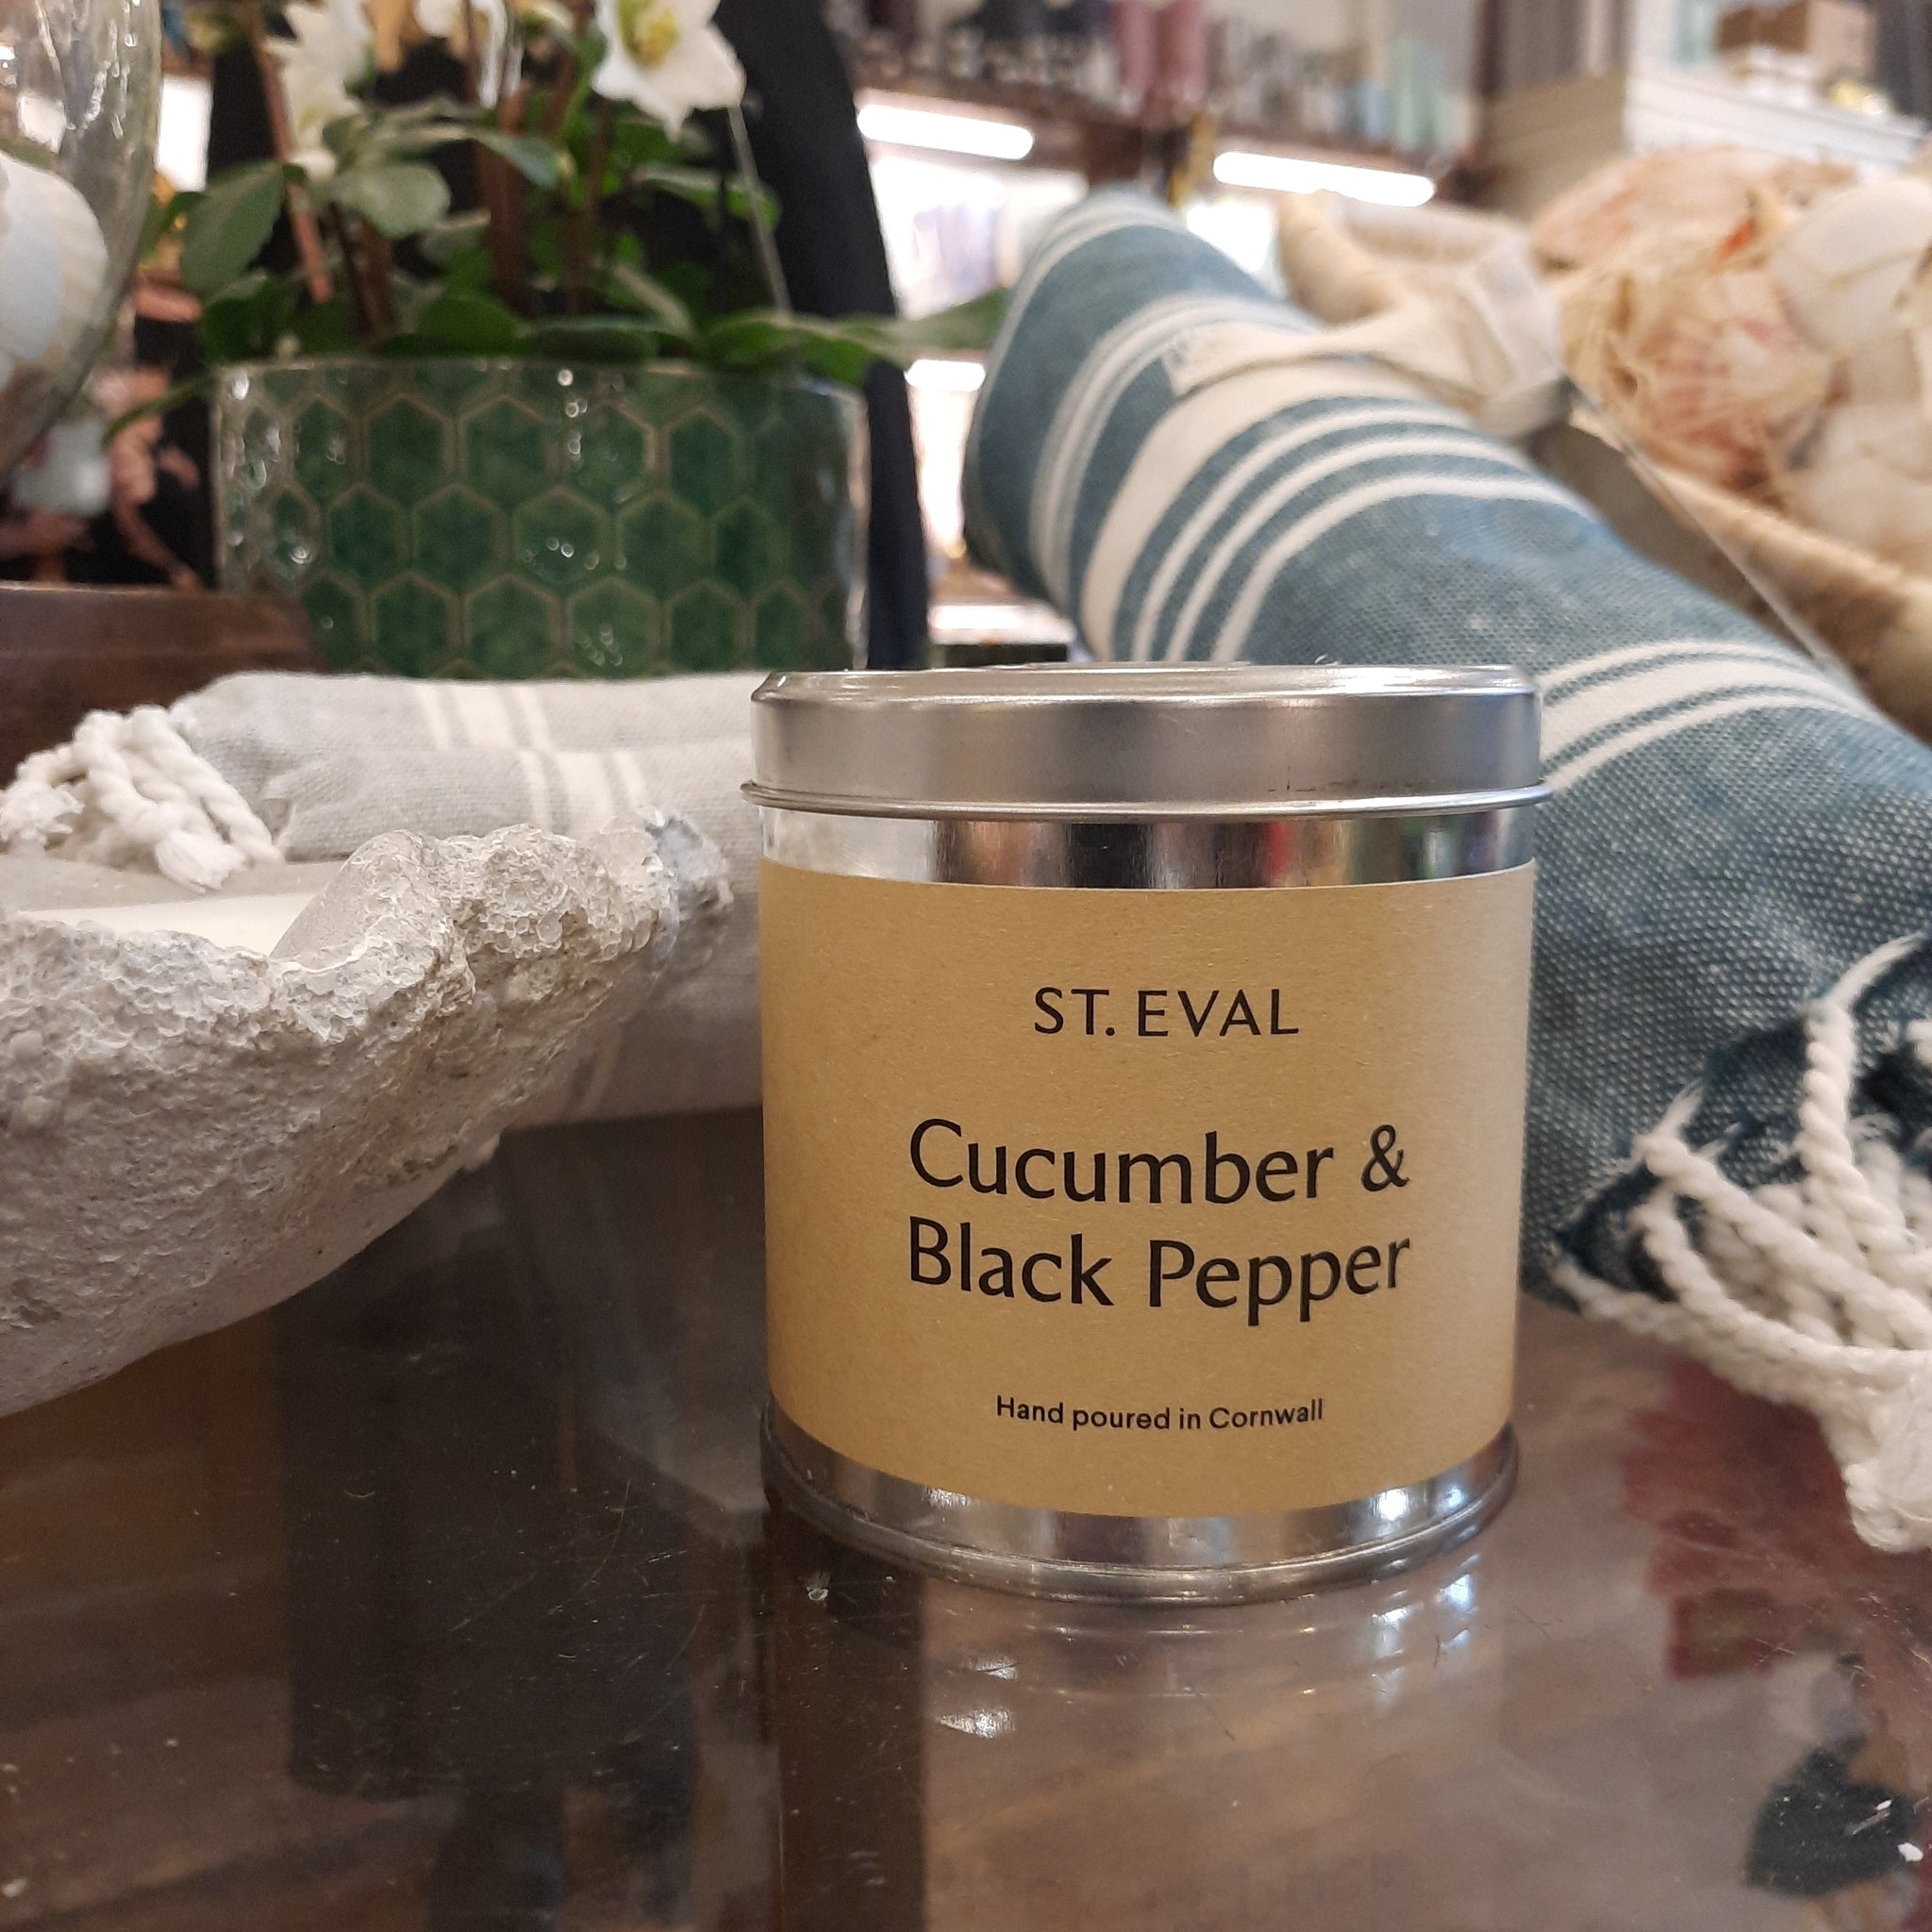 St Eval Cucumber and Black Pepper tin